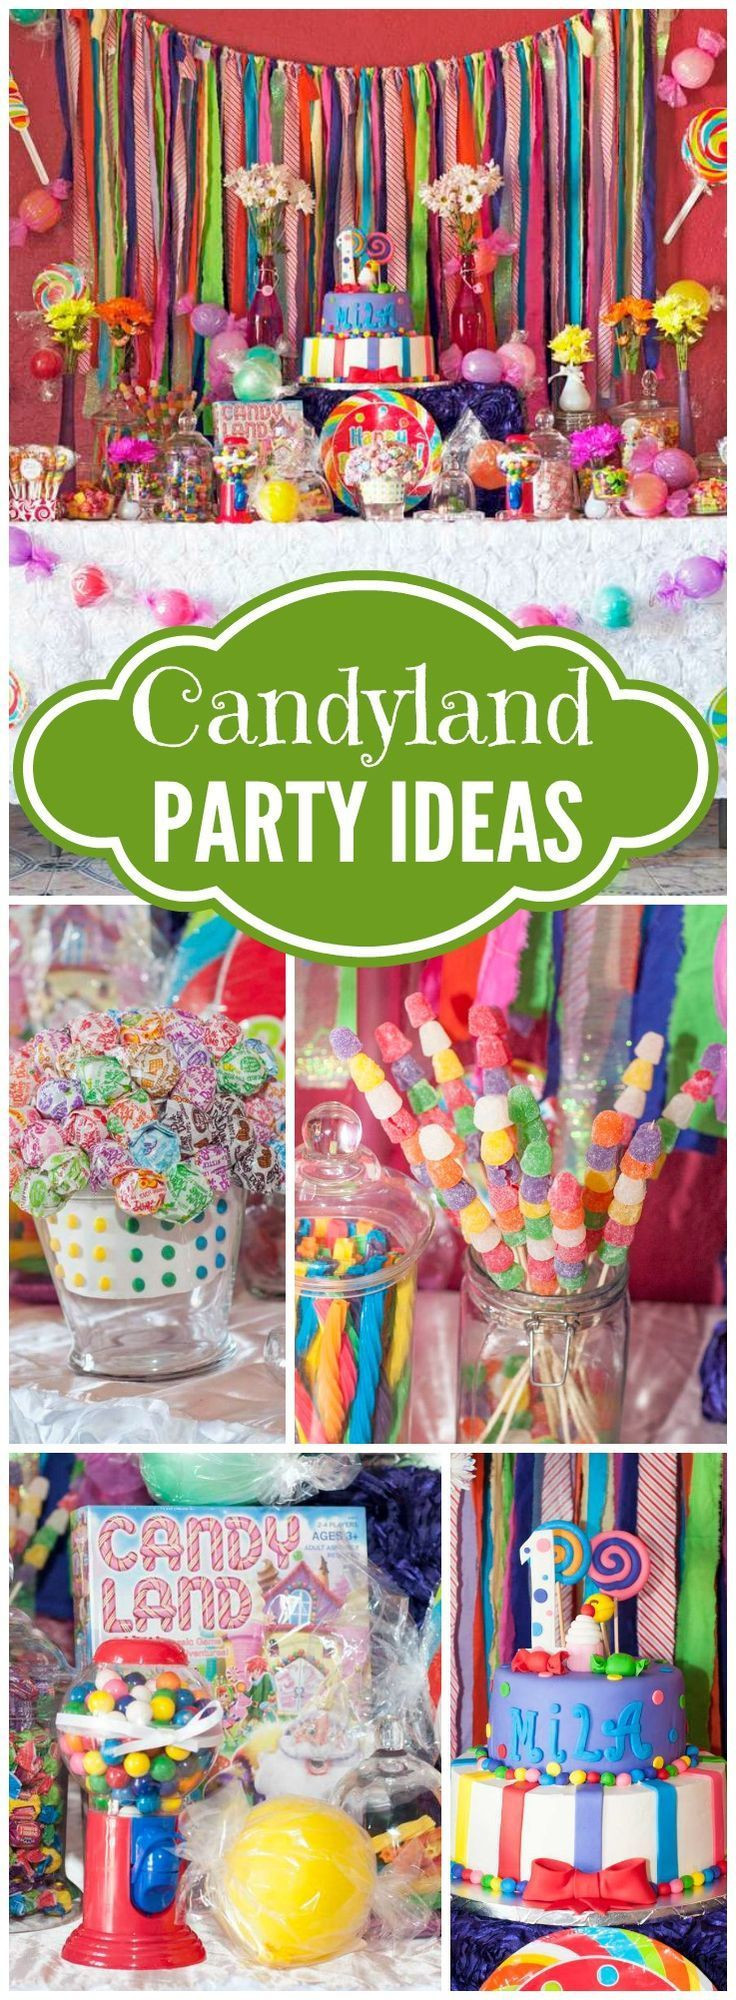 Candyland 1St Birthday Party Ideas
 Candyland Birthday "Mila s 1st Candyland"